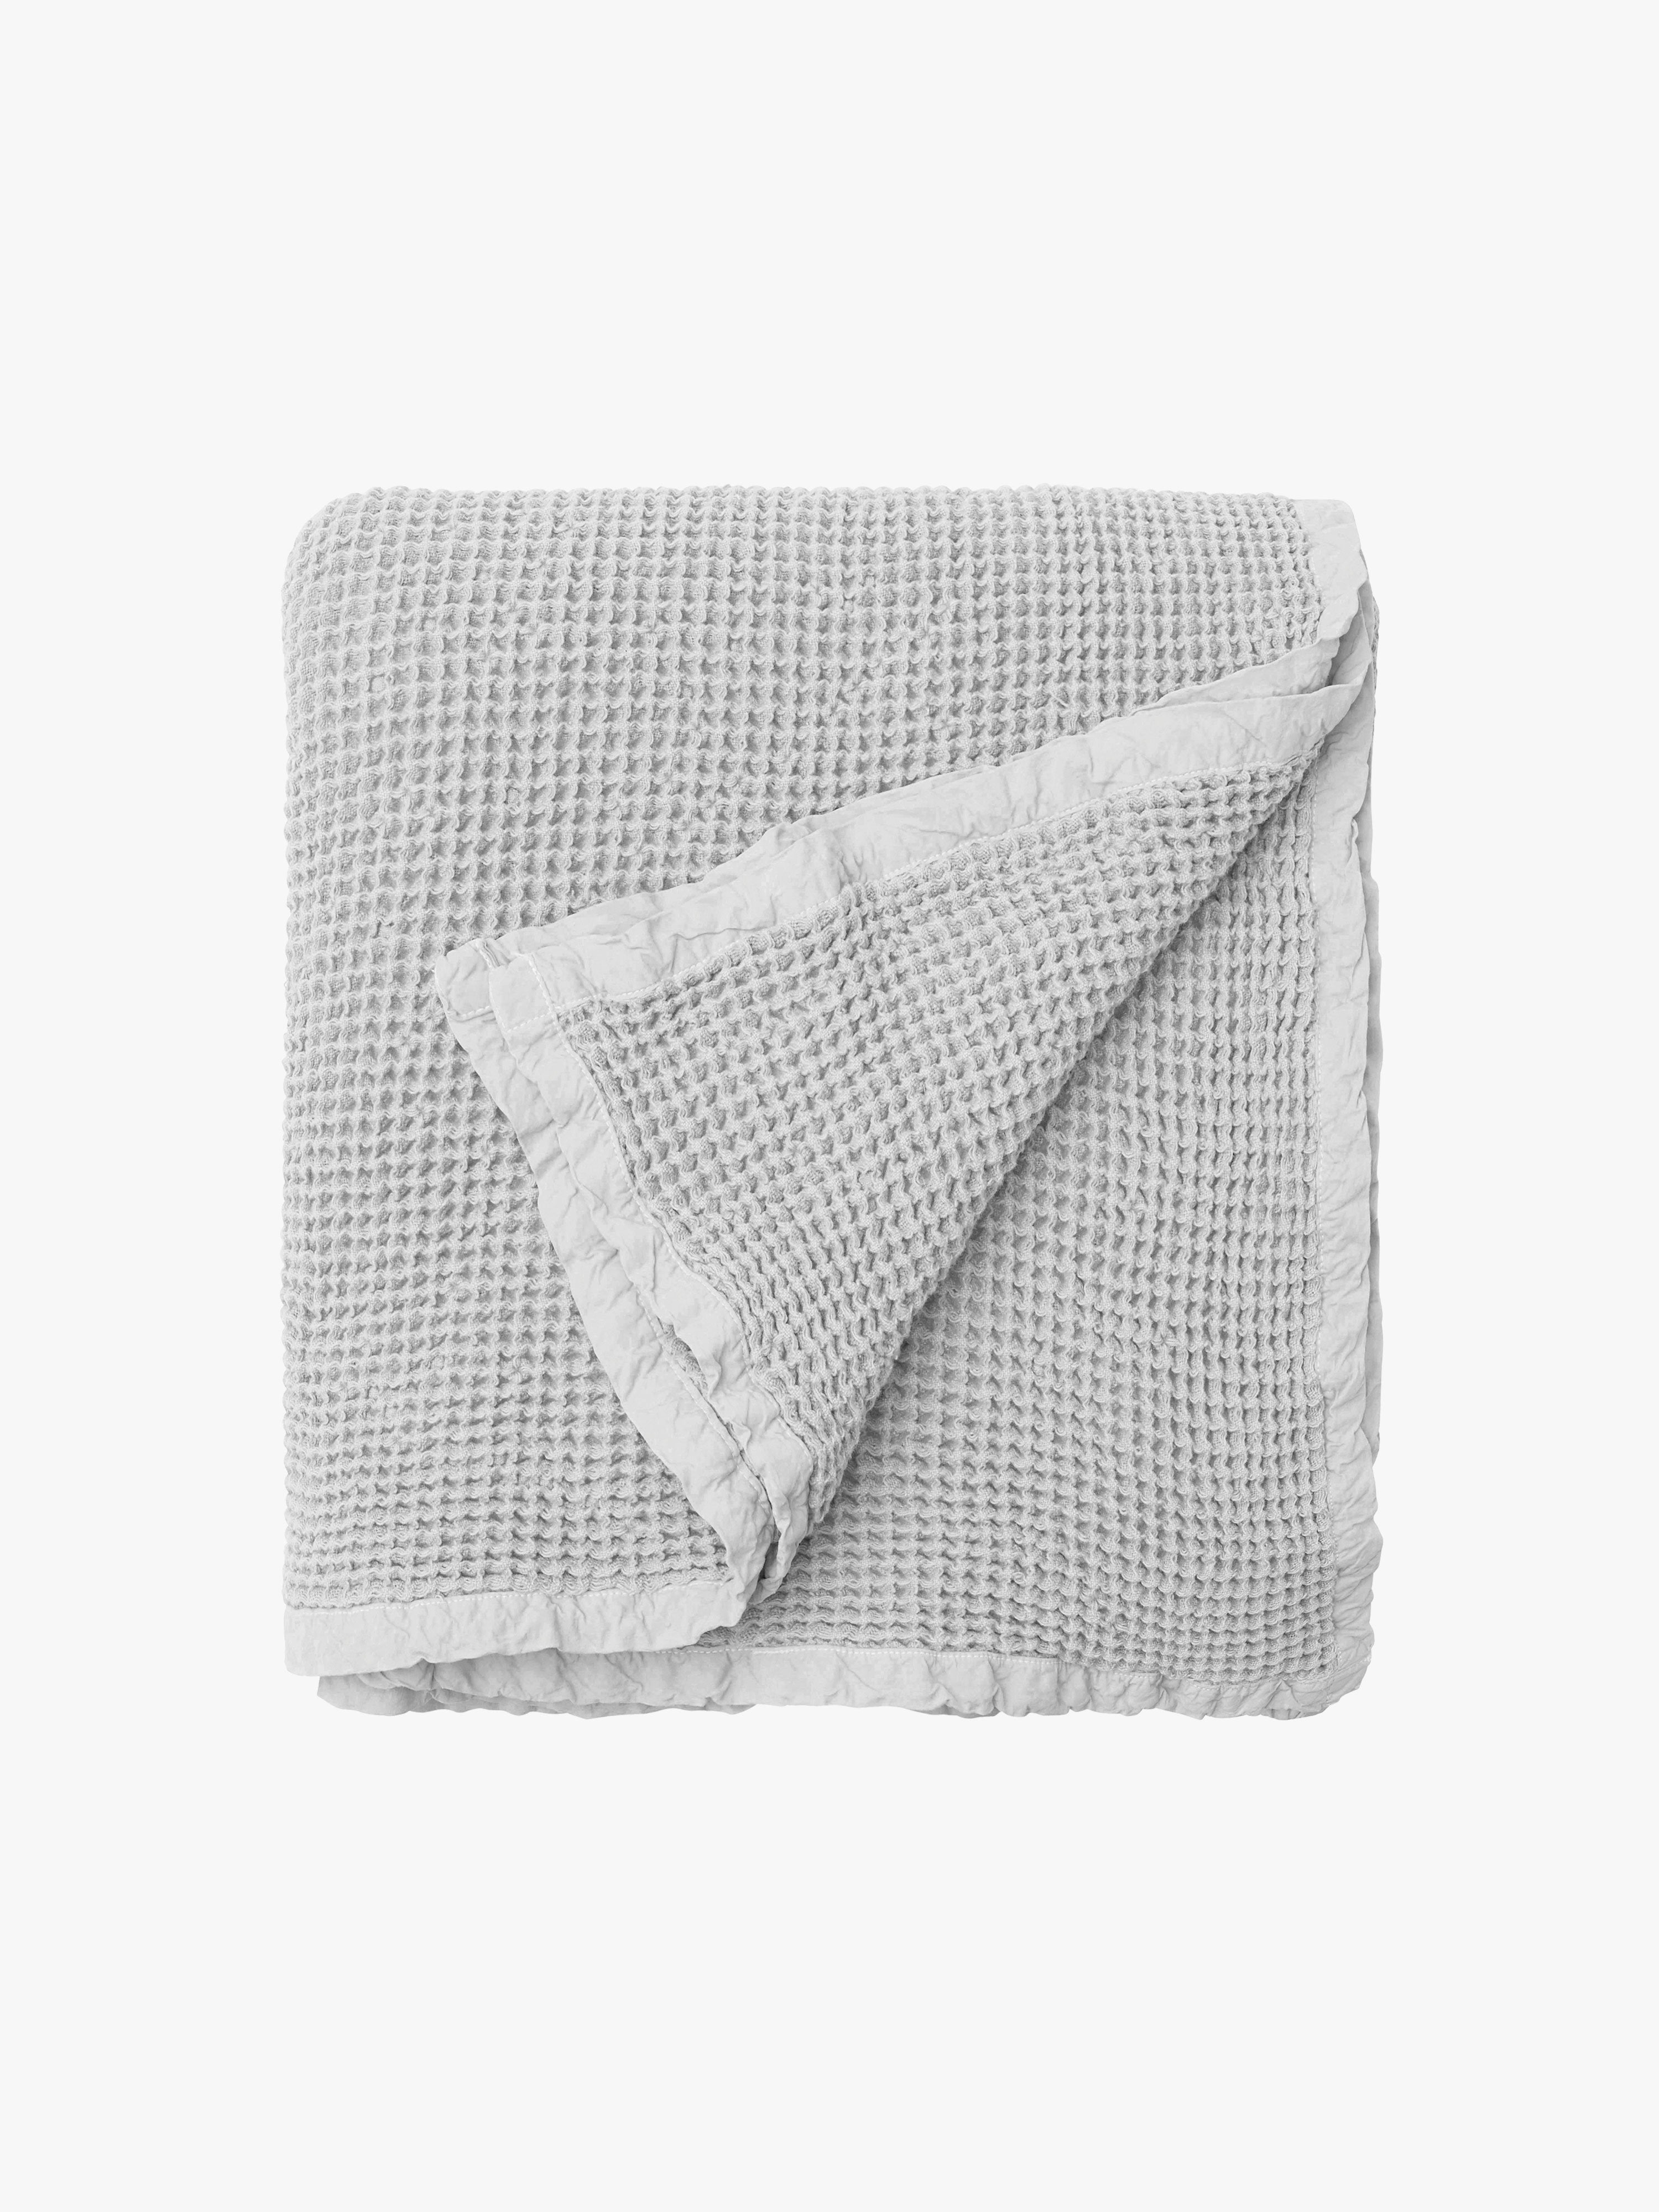 Hepburn Blanket - Silver Blanket AW18 Small 